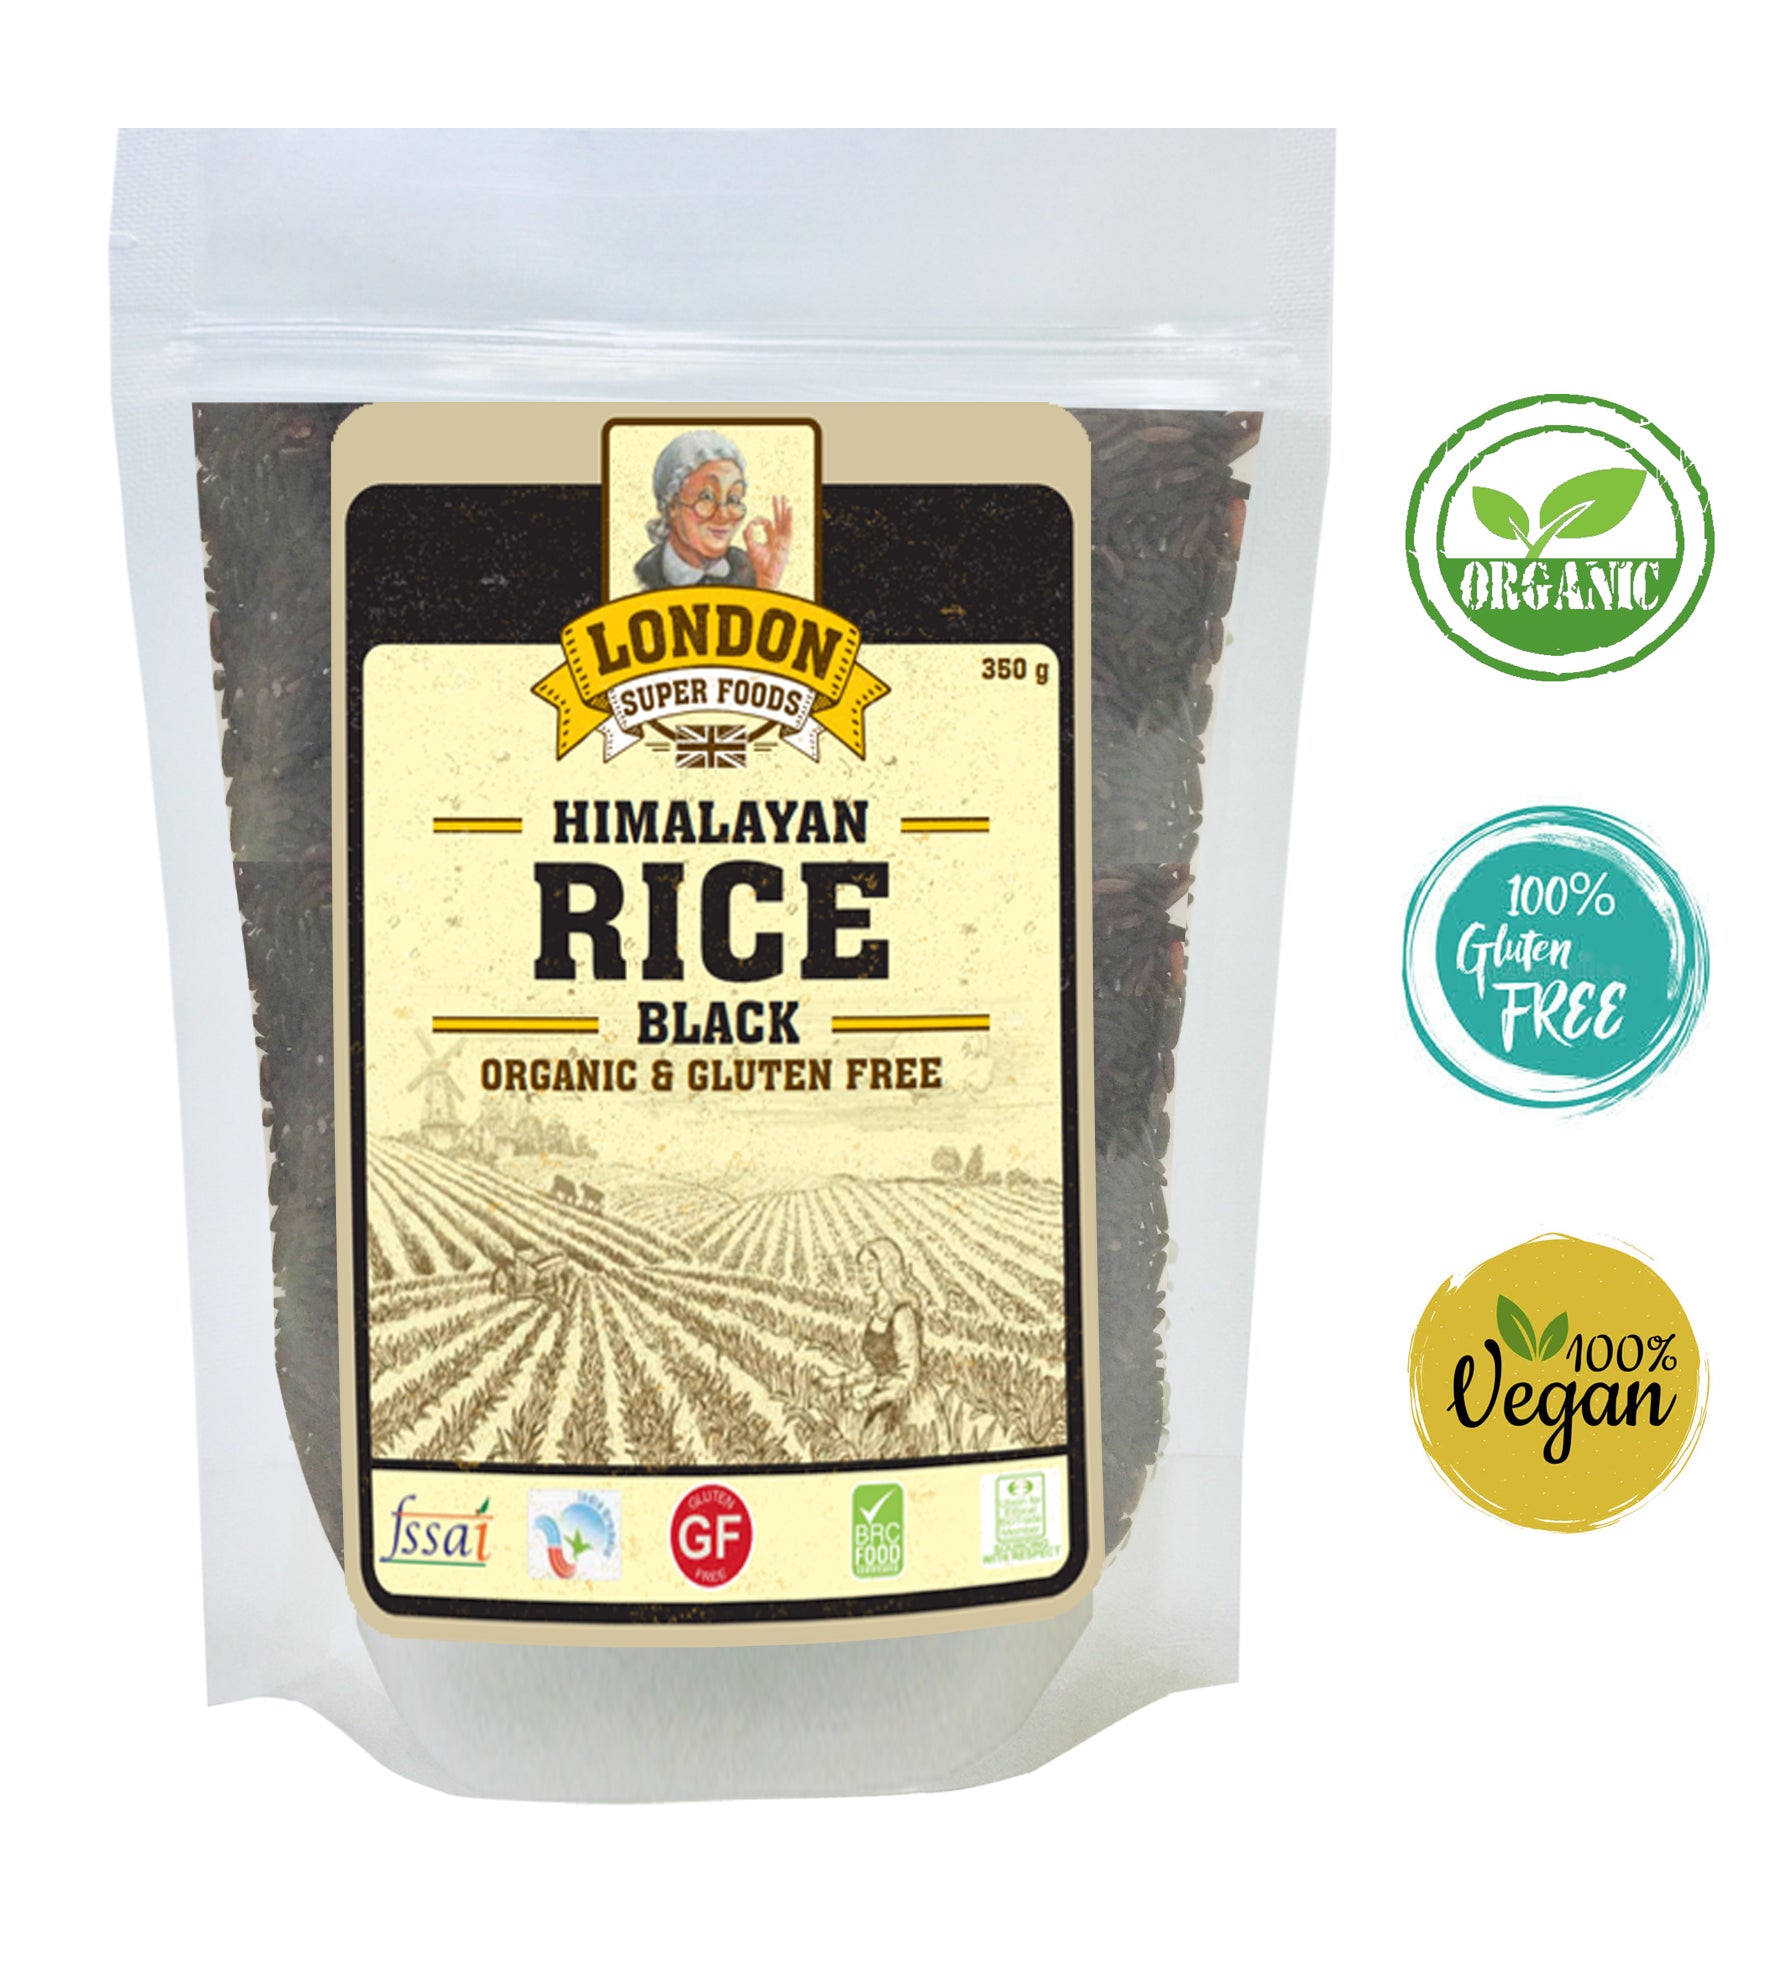 LONDON SUPER FOODS Himalayan Organic Black Rice, 350g - Gluten Free